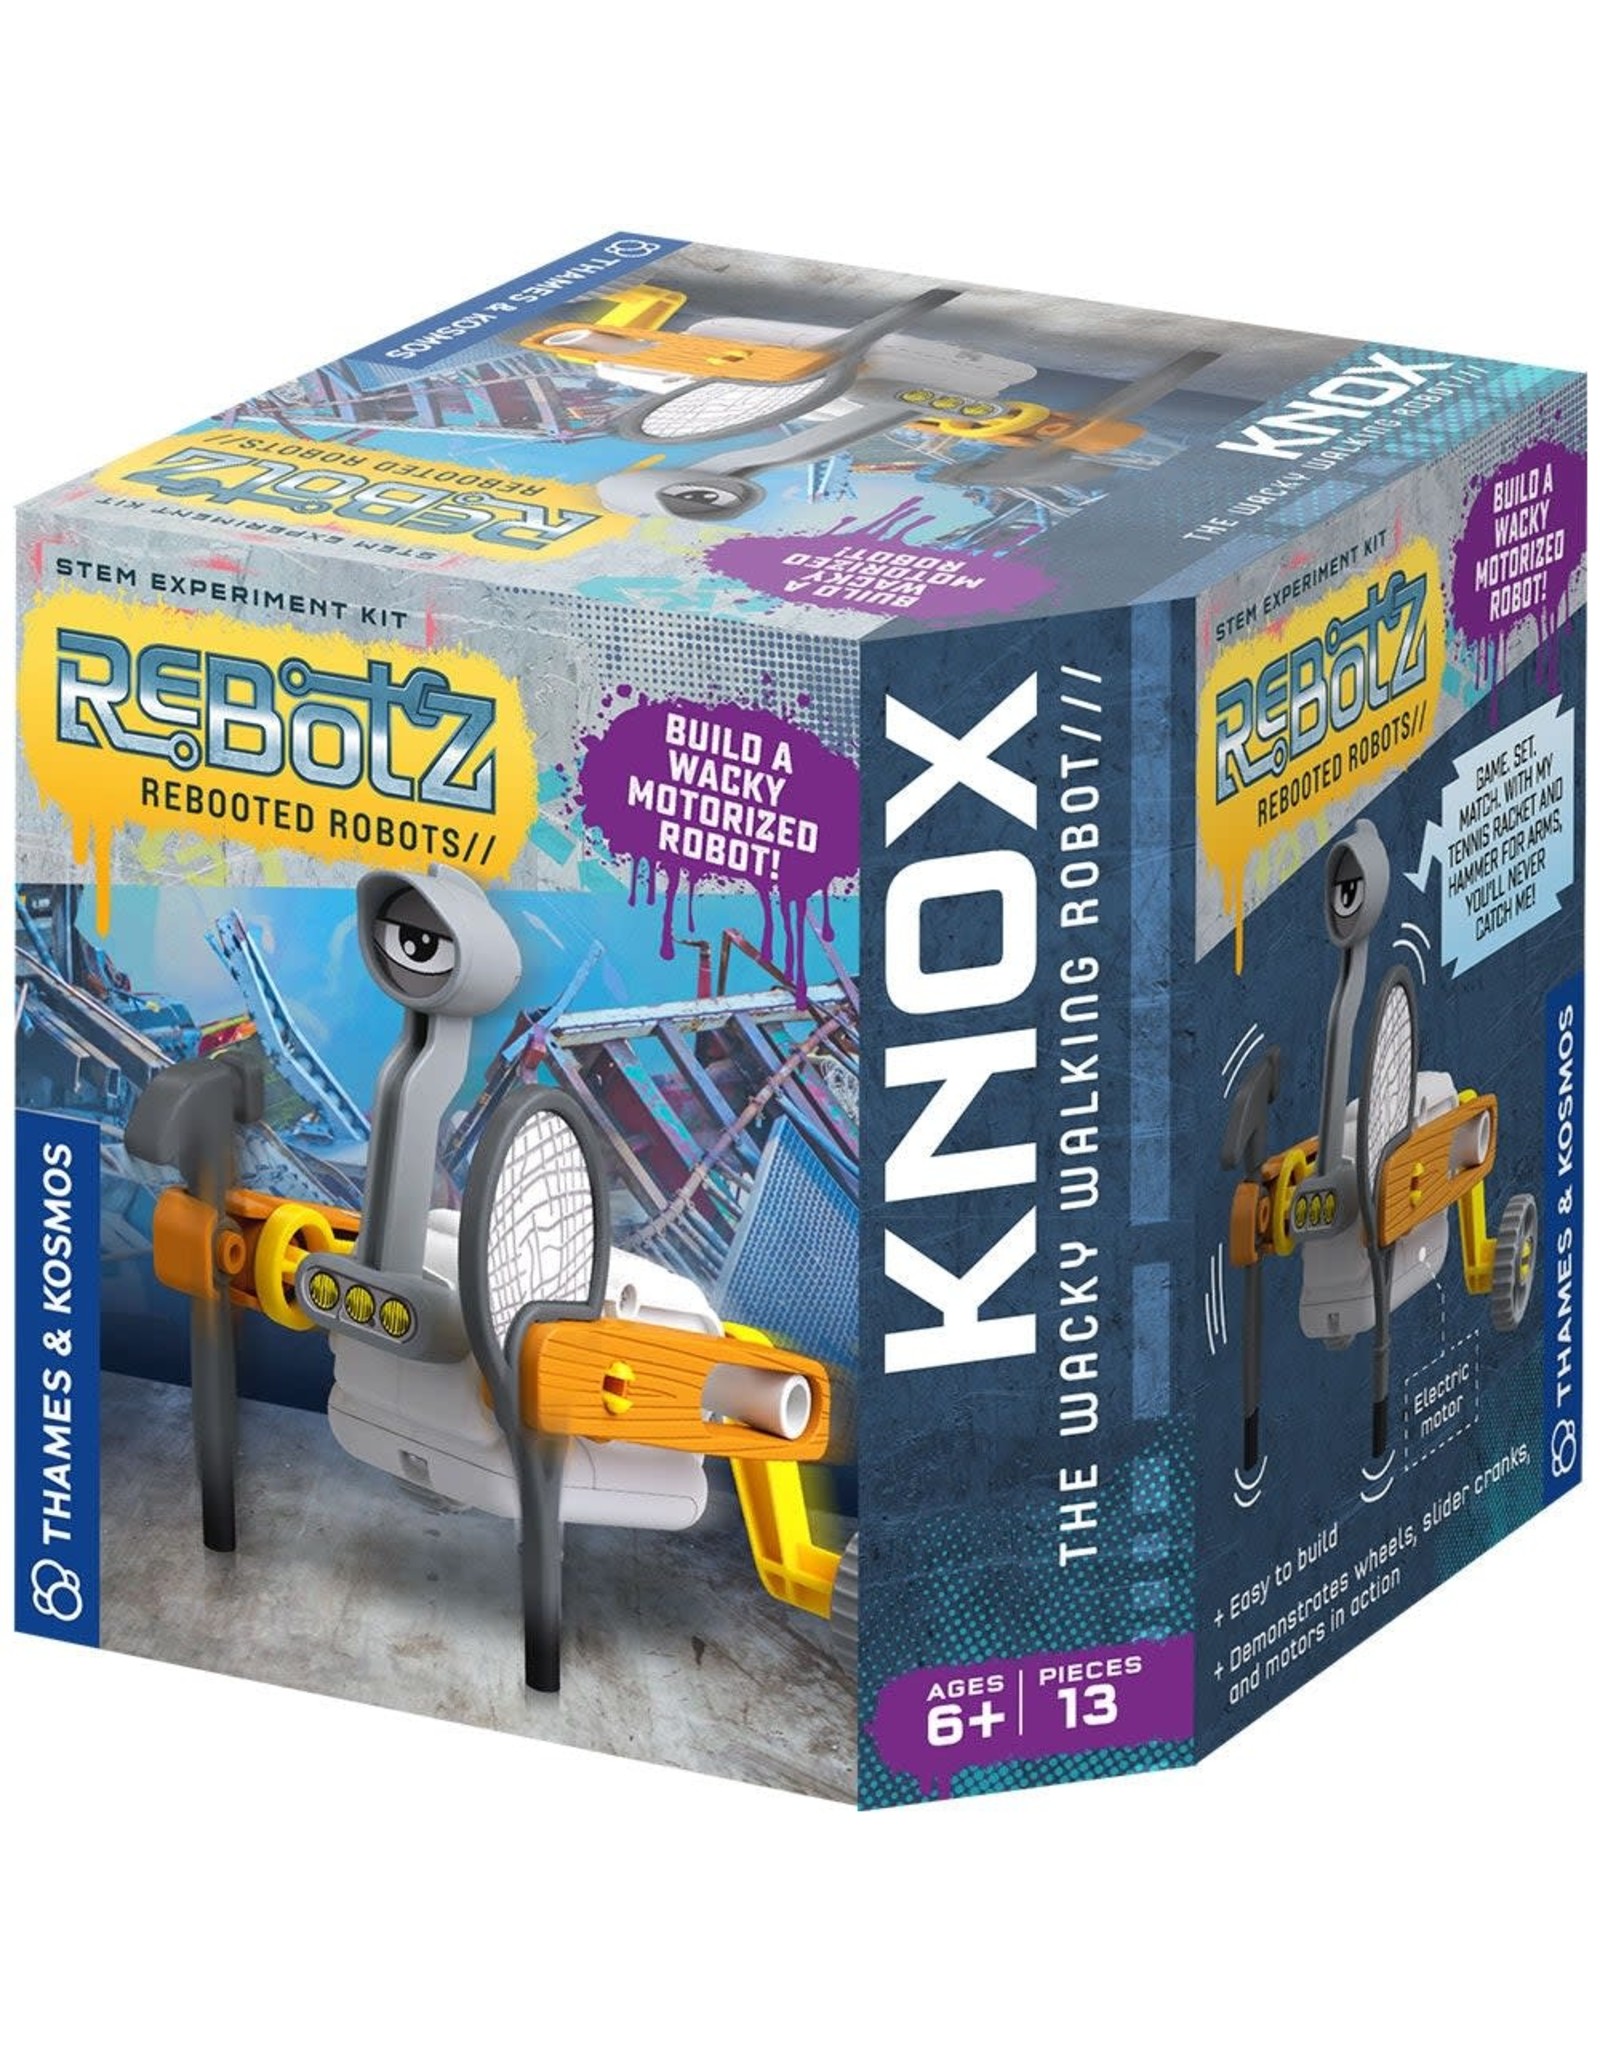 Thames & Kosmos ReBotz: Knox - The Wacky Walking Robot